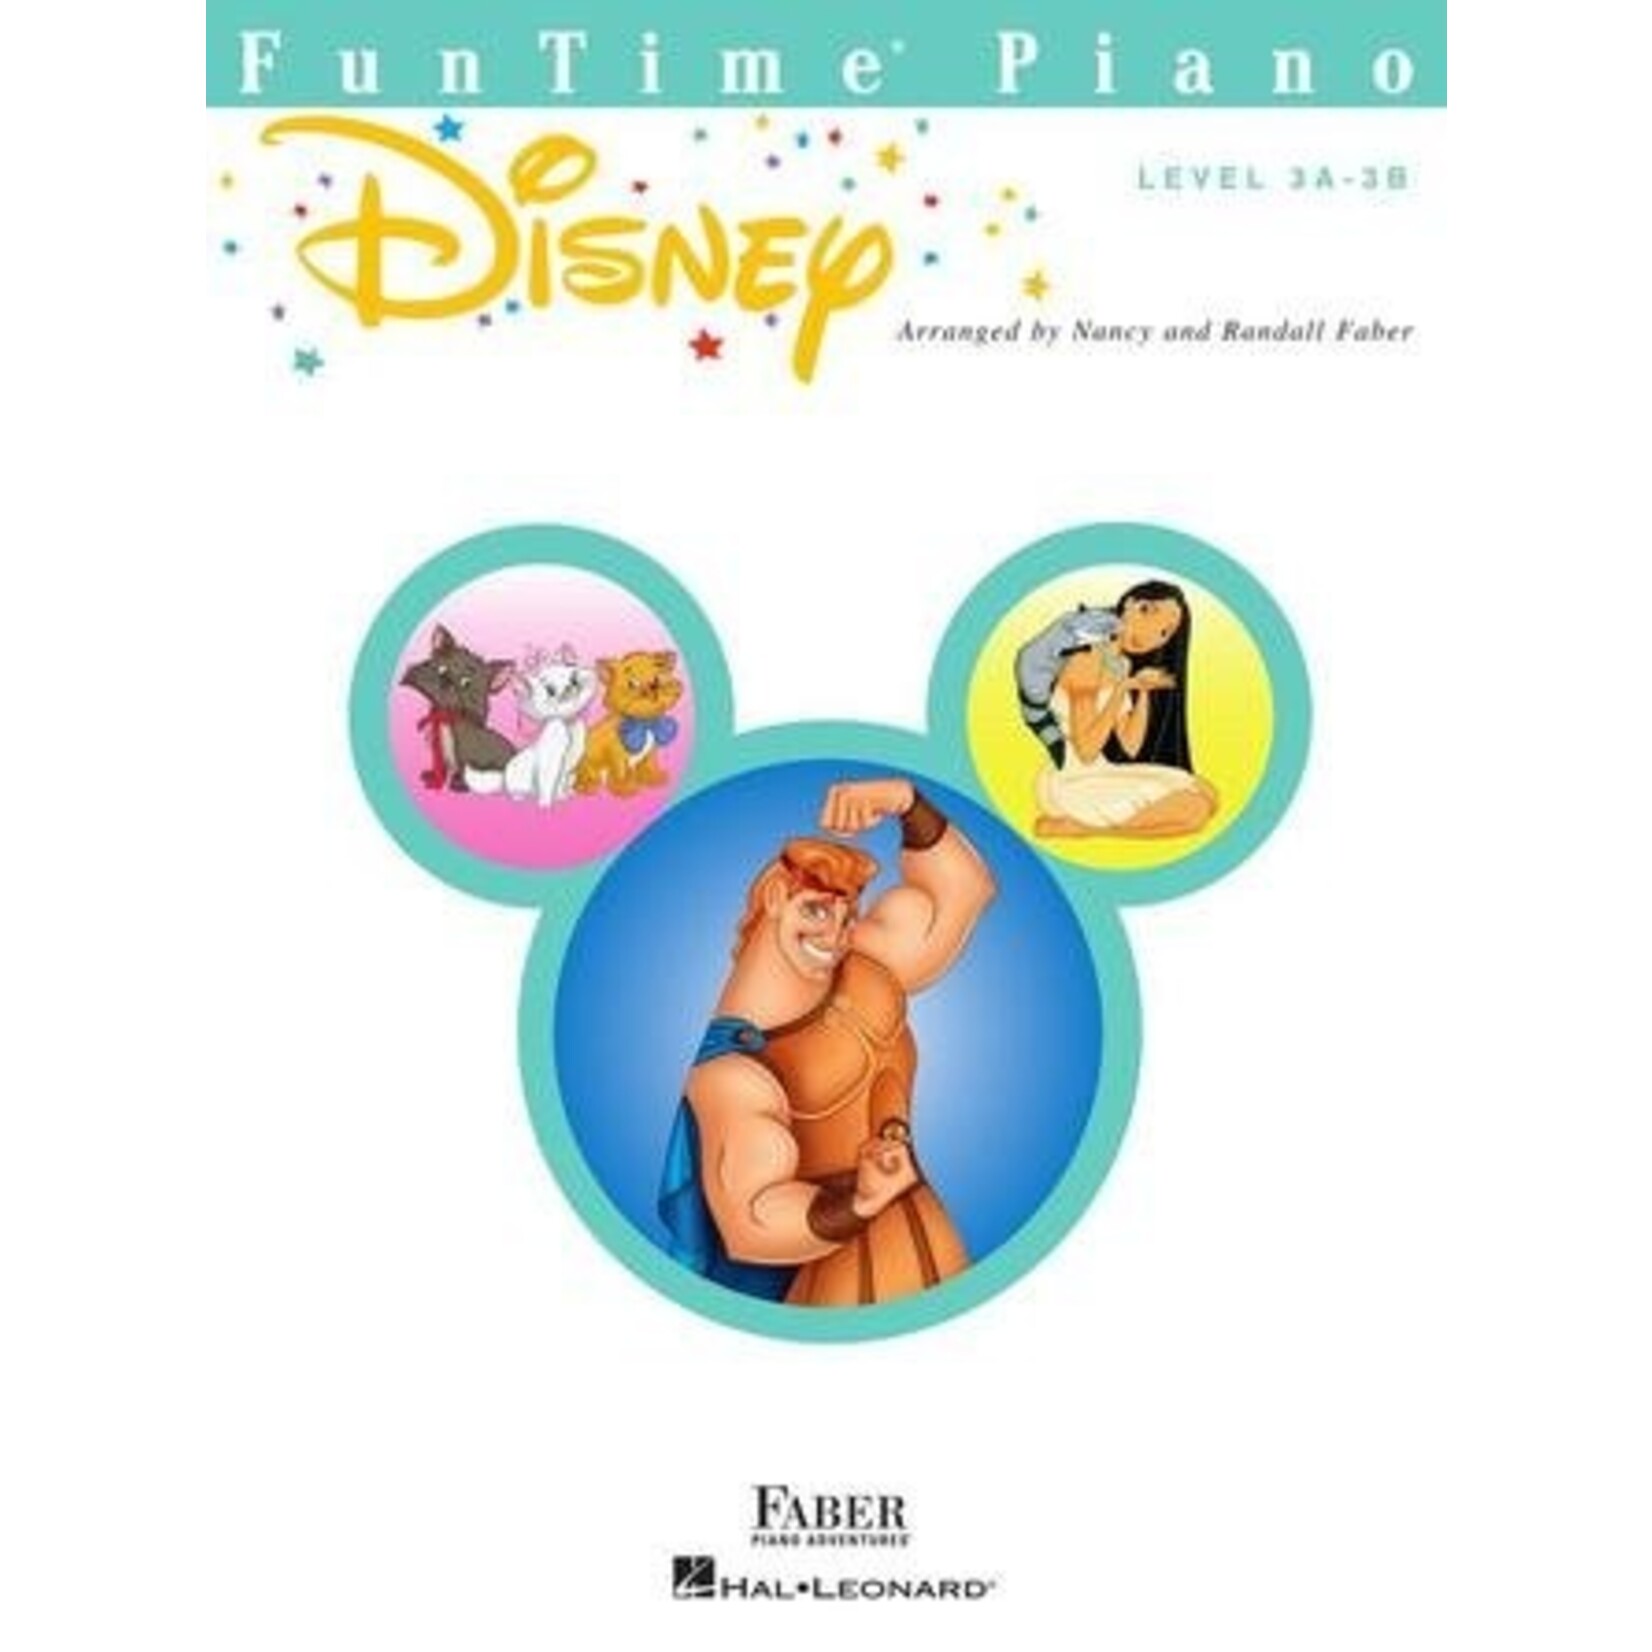 Disney Fun Time Piano Lv 3A-3B